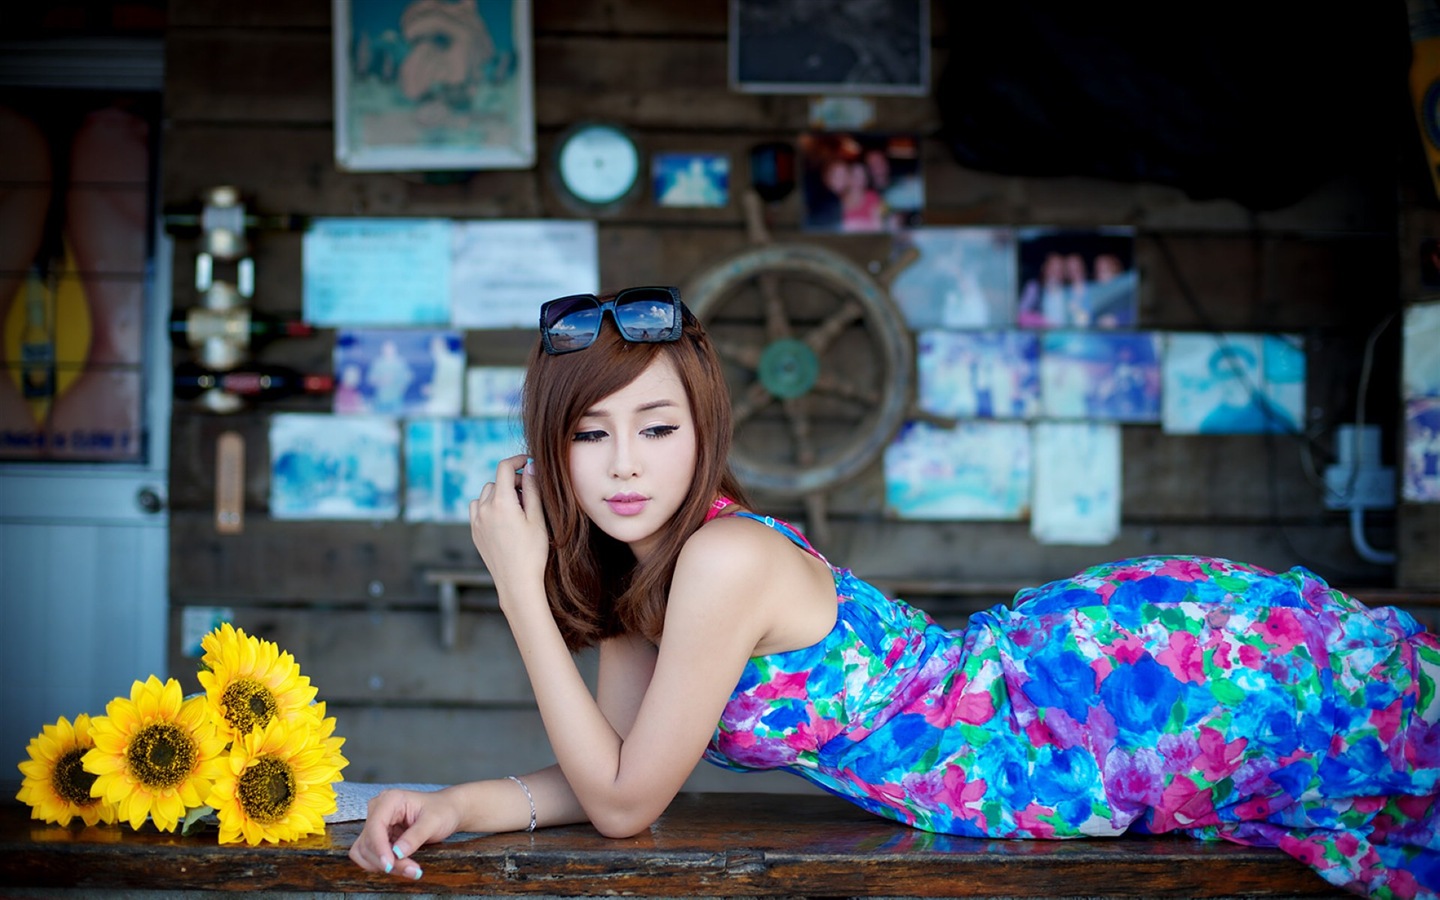 Pure seductive Oriental girls HD wallpapers #15 - 1440x900